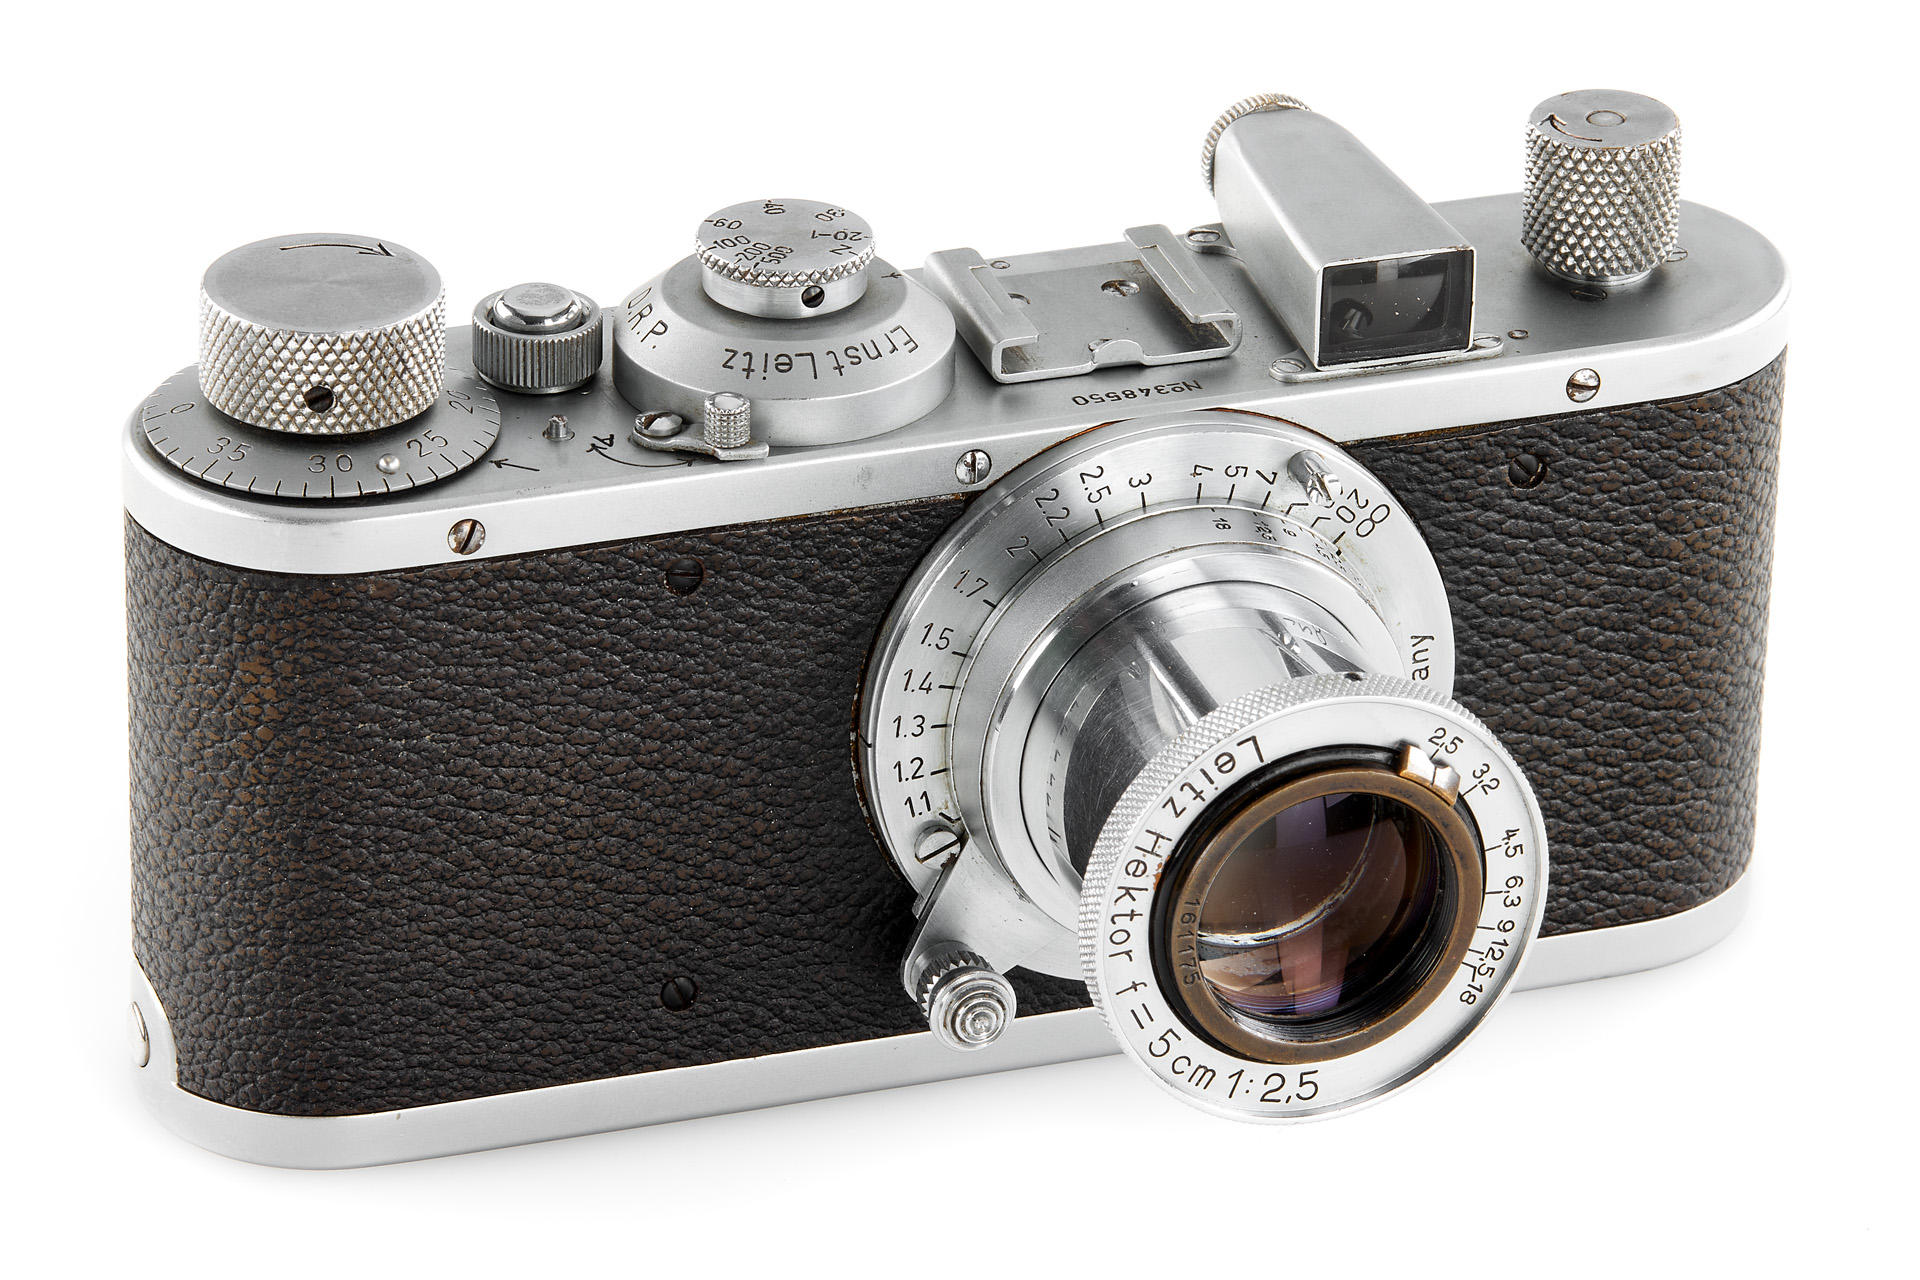 Leica Standard with Hektor 2.5/5cm